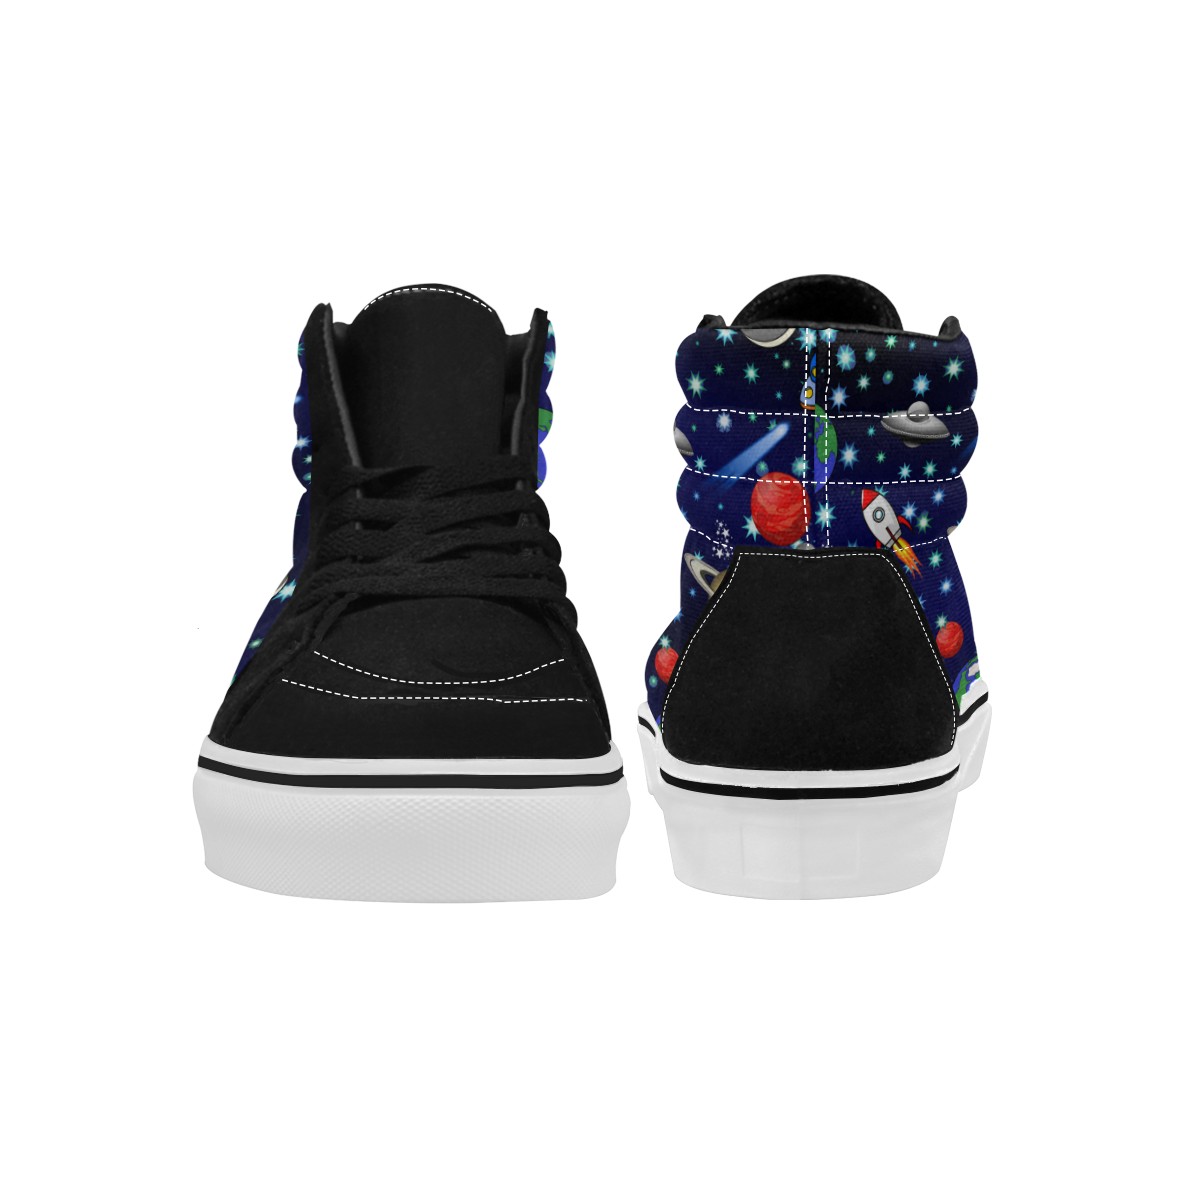 Galaxy Universe - Planets,Stars,Comets,Rockets Men's High Top Skateboarding Shoes (Model E001-1)